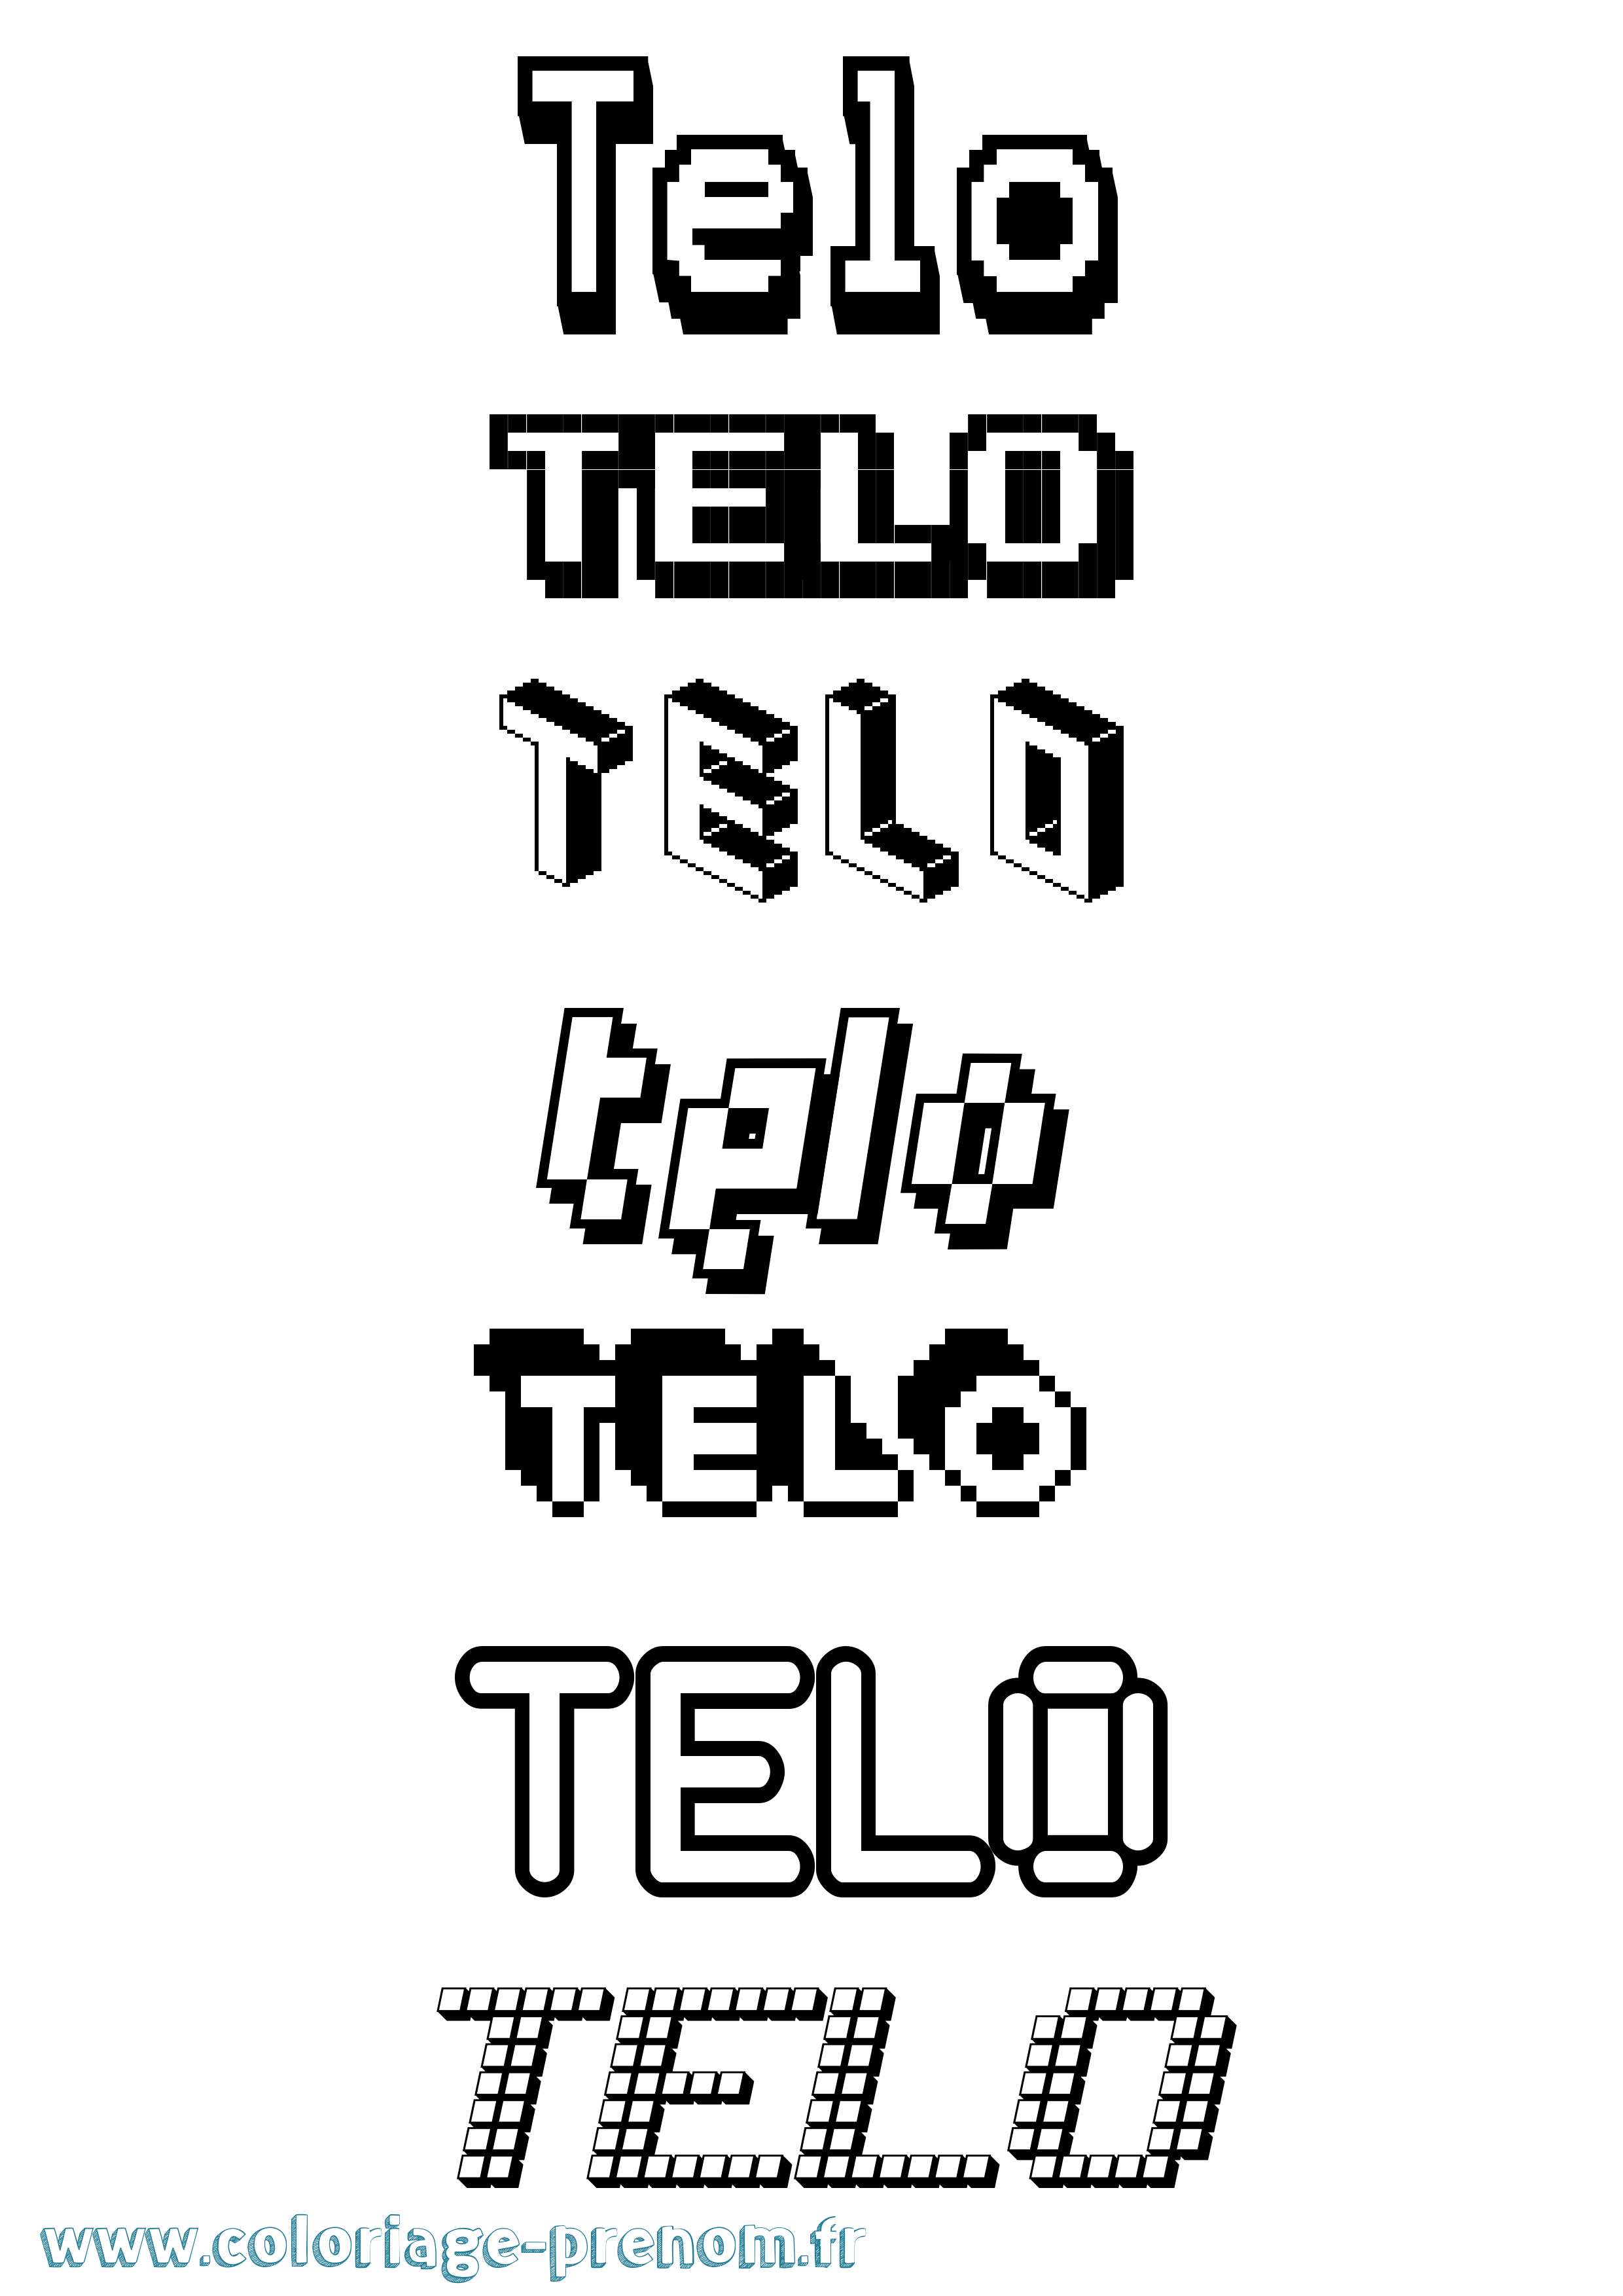 Coloriage prénom Telo Pixel